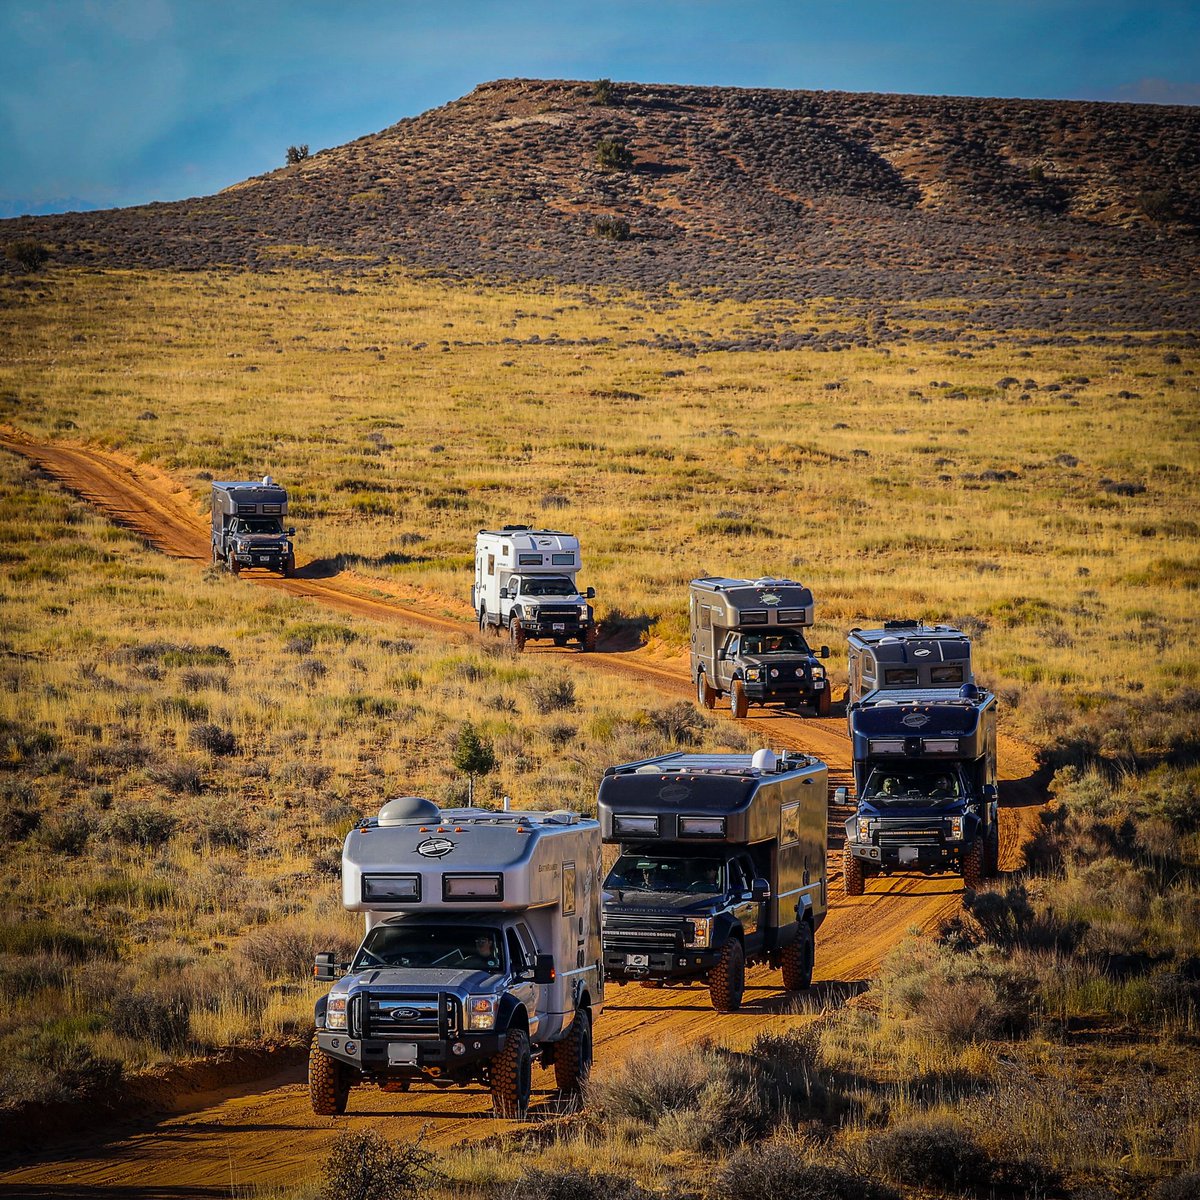 EarthRoamers in formation 🏜️
·
·
·

#earthroamer  #offroad4x4 #expeditionvehicle #campinglife #overlanding #4x4life #4x4trucks #vanlife #vanlifeadventures